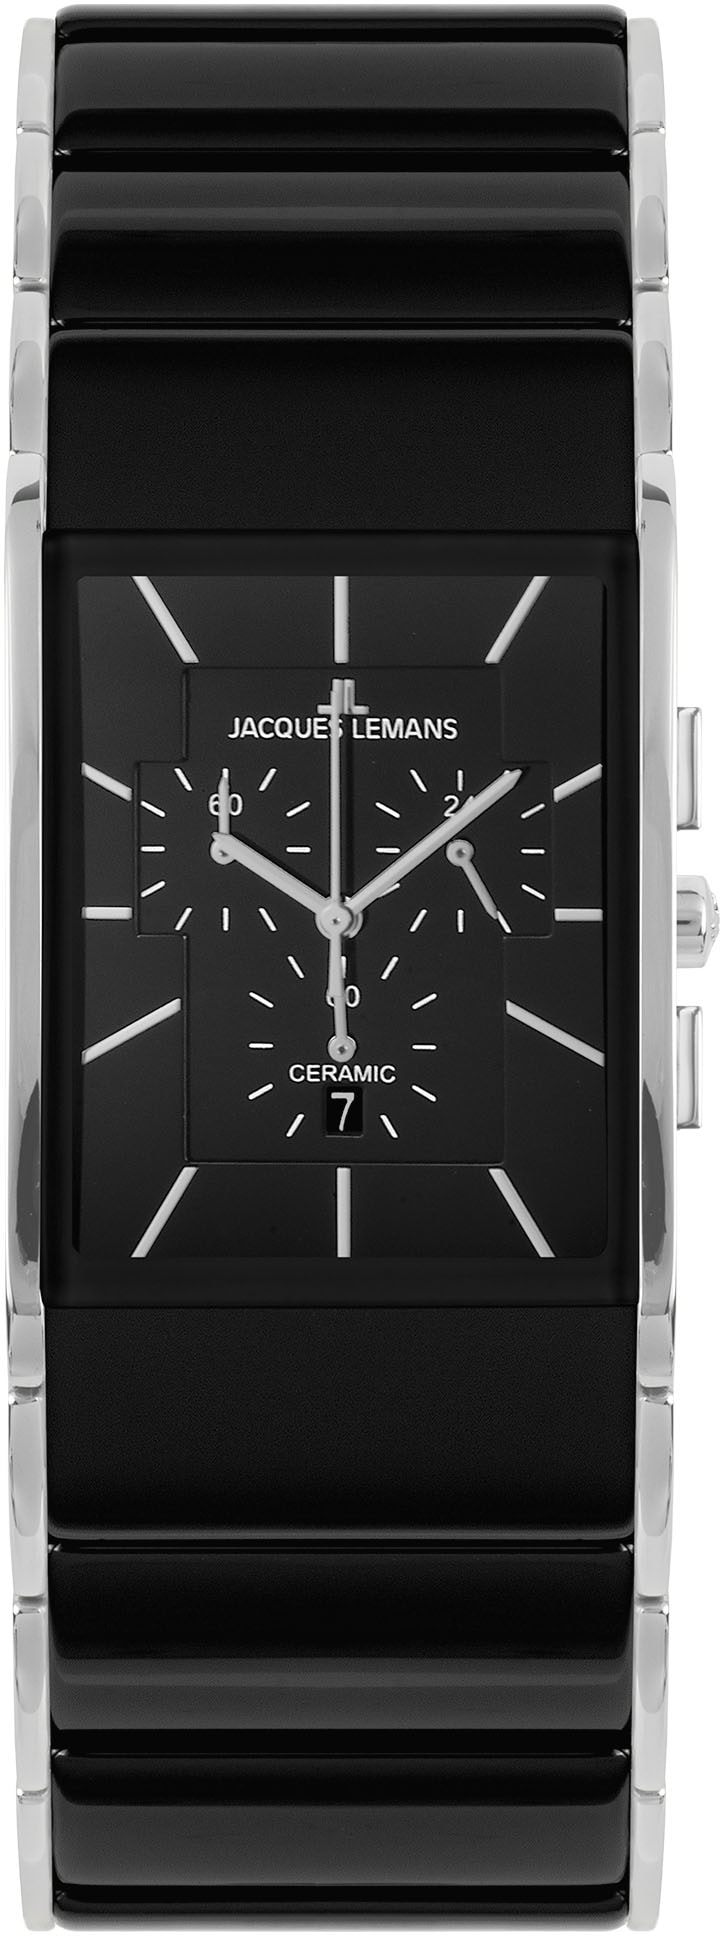 Jacques Lemans Chronograph »Dublin«, Quarzuhr, Armbanduhr, Damenuhr, Herrenuhr, Keramik, Stoppfunktion